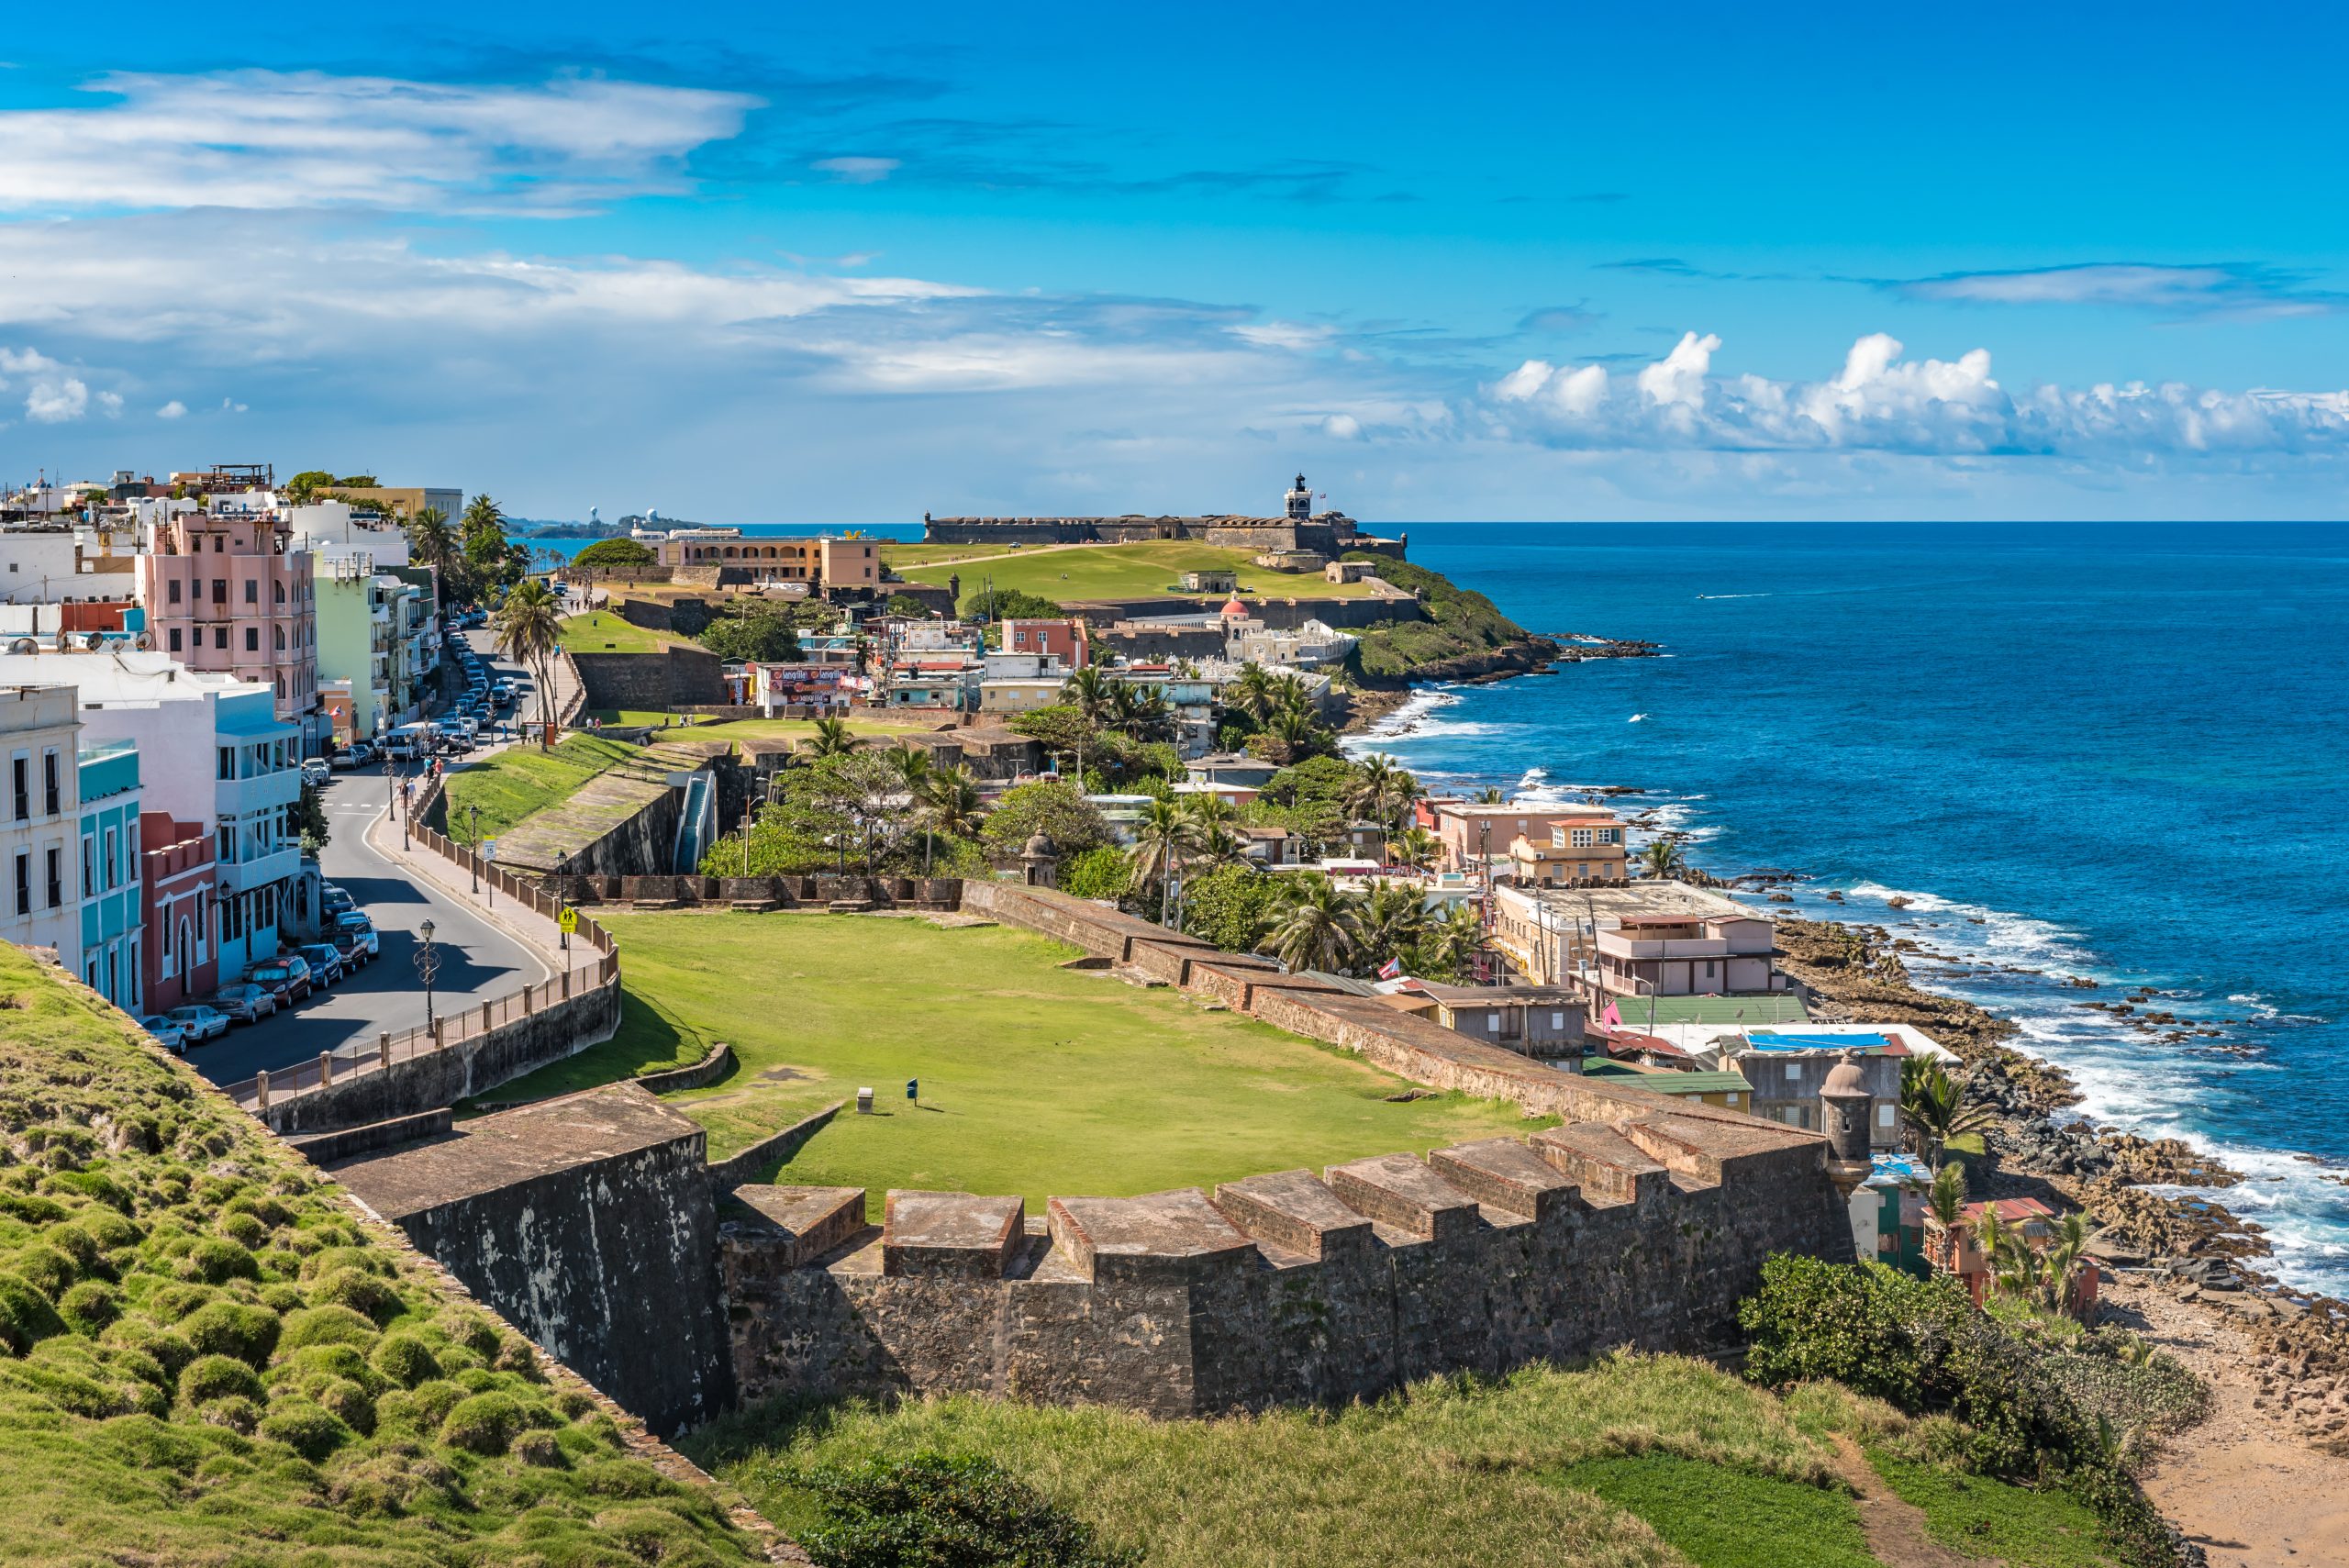 should I move to puerto rico?